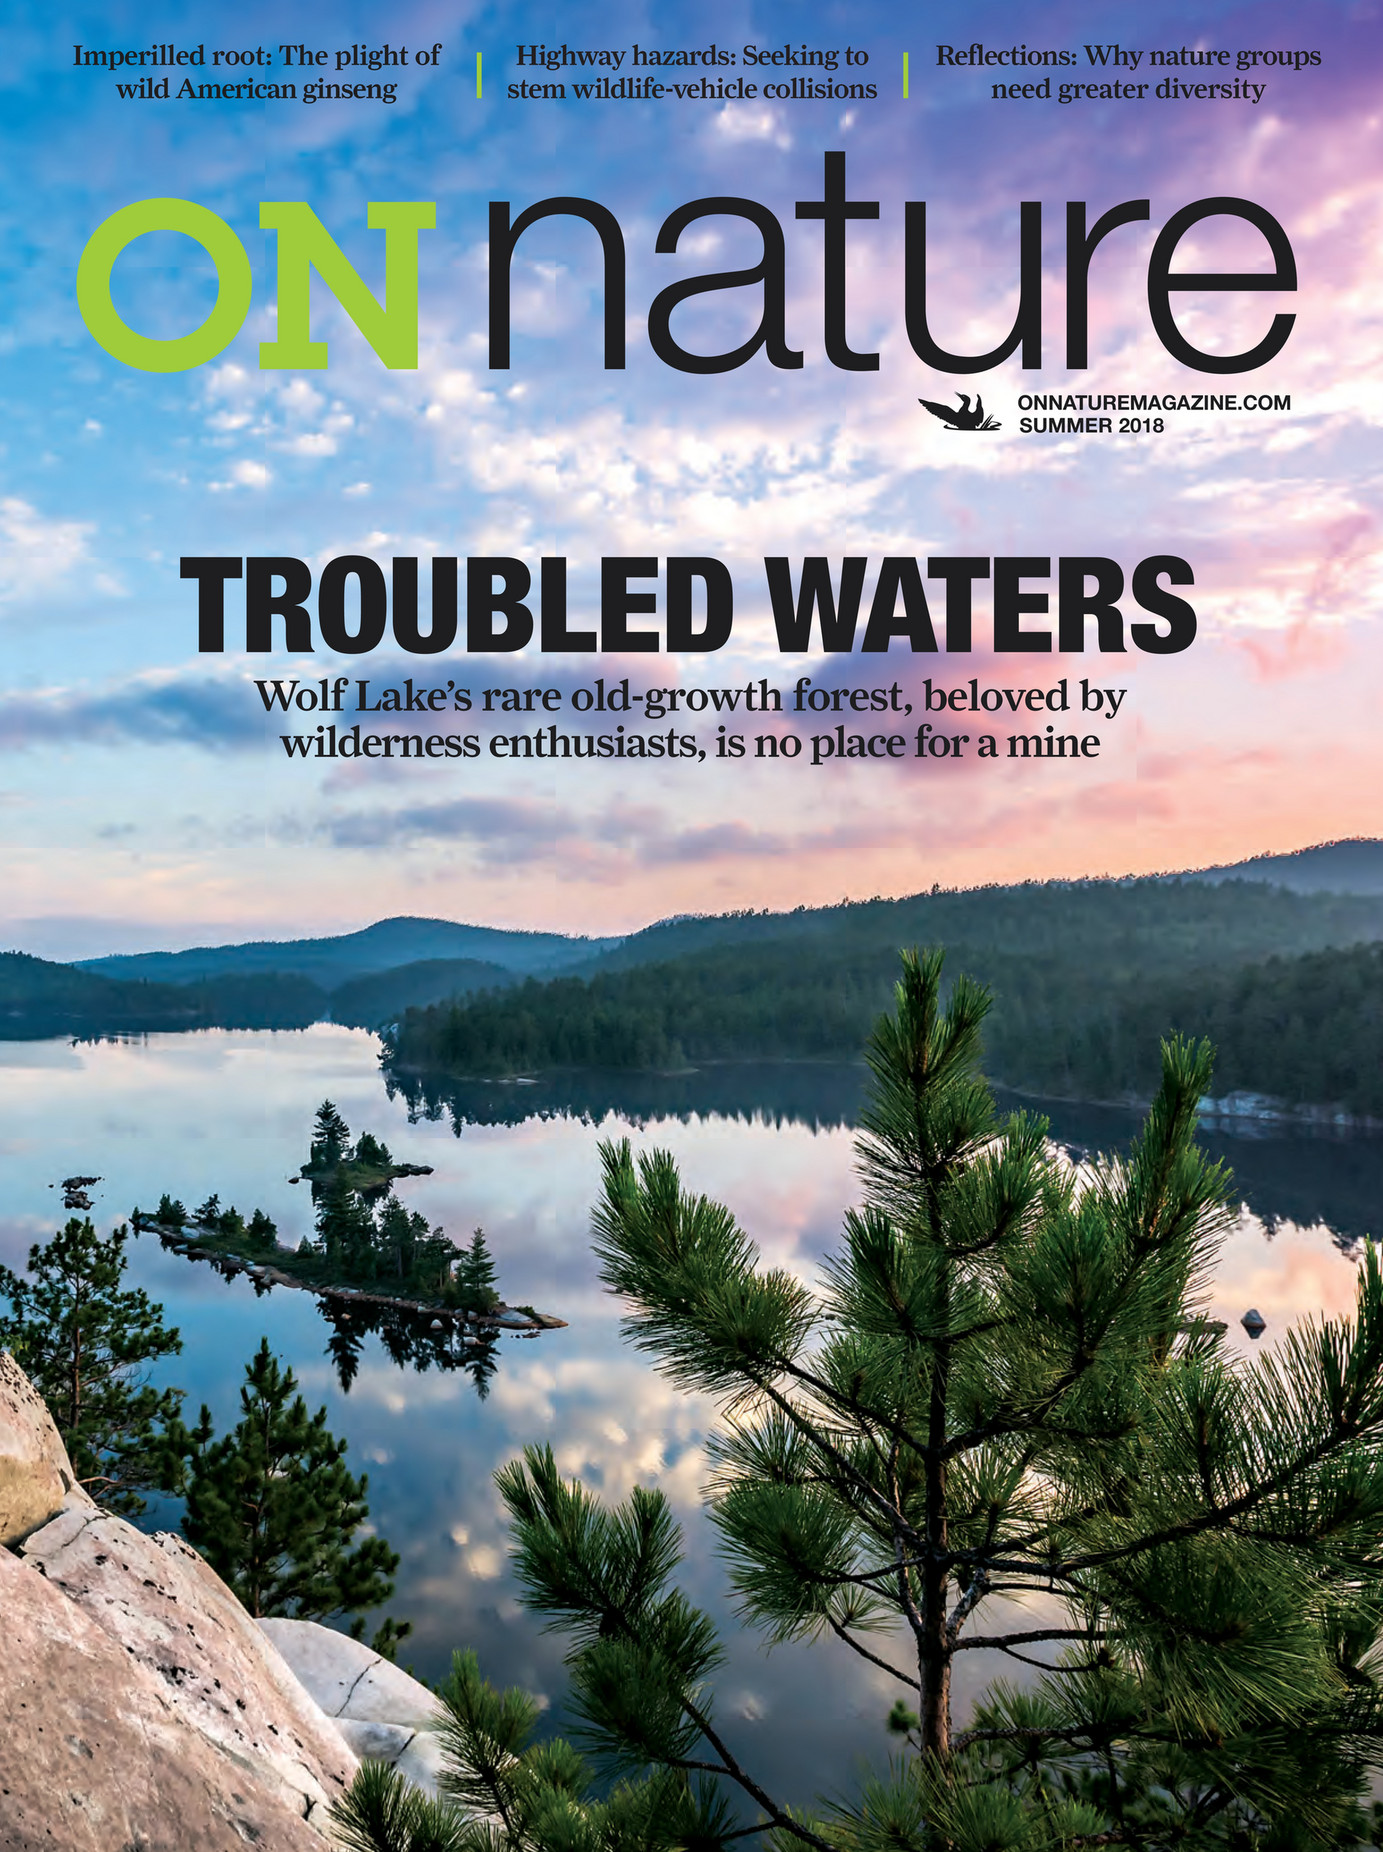 ON Nature magazine - Summer 2018 - Page 24-25